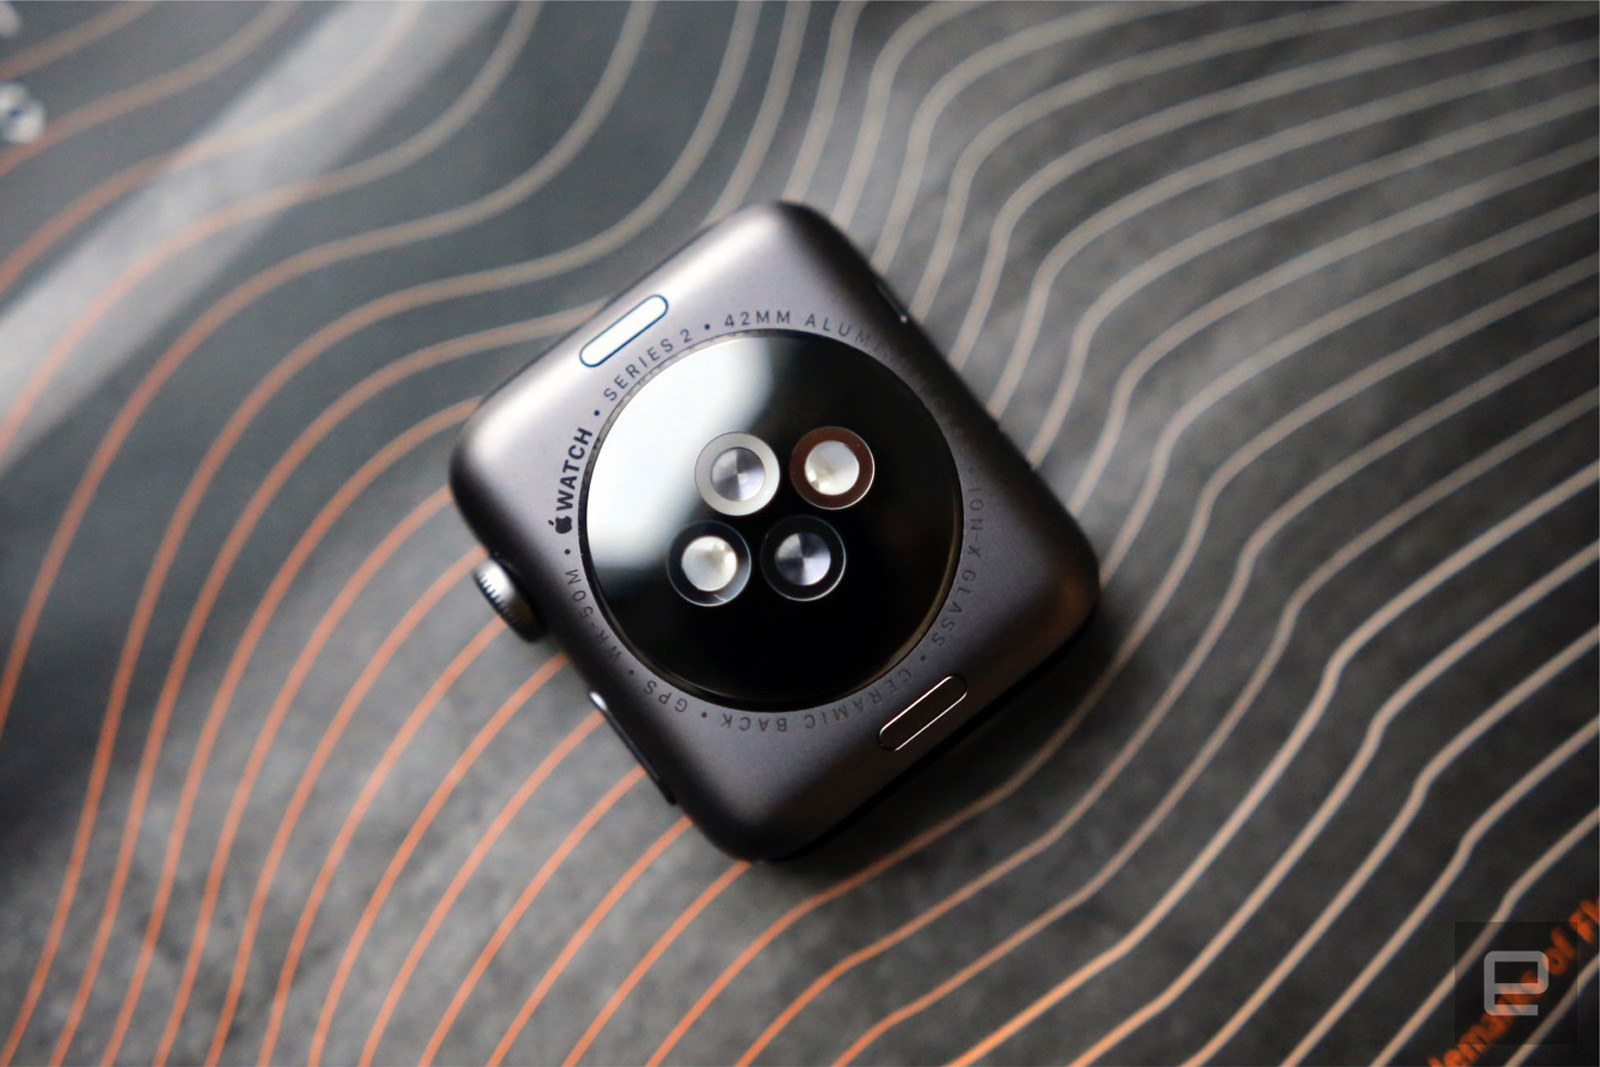 Apple Watch Series 2のバッテリー膨張問題 無償修理で対応へ 38mmモデルは対象外 Engadget 日本版